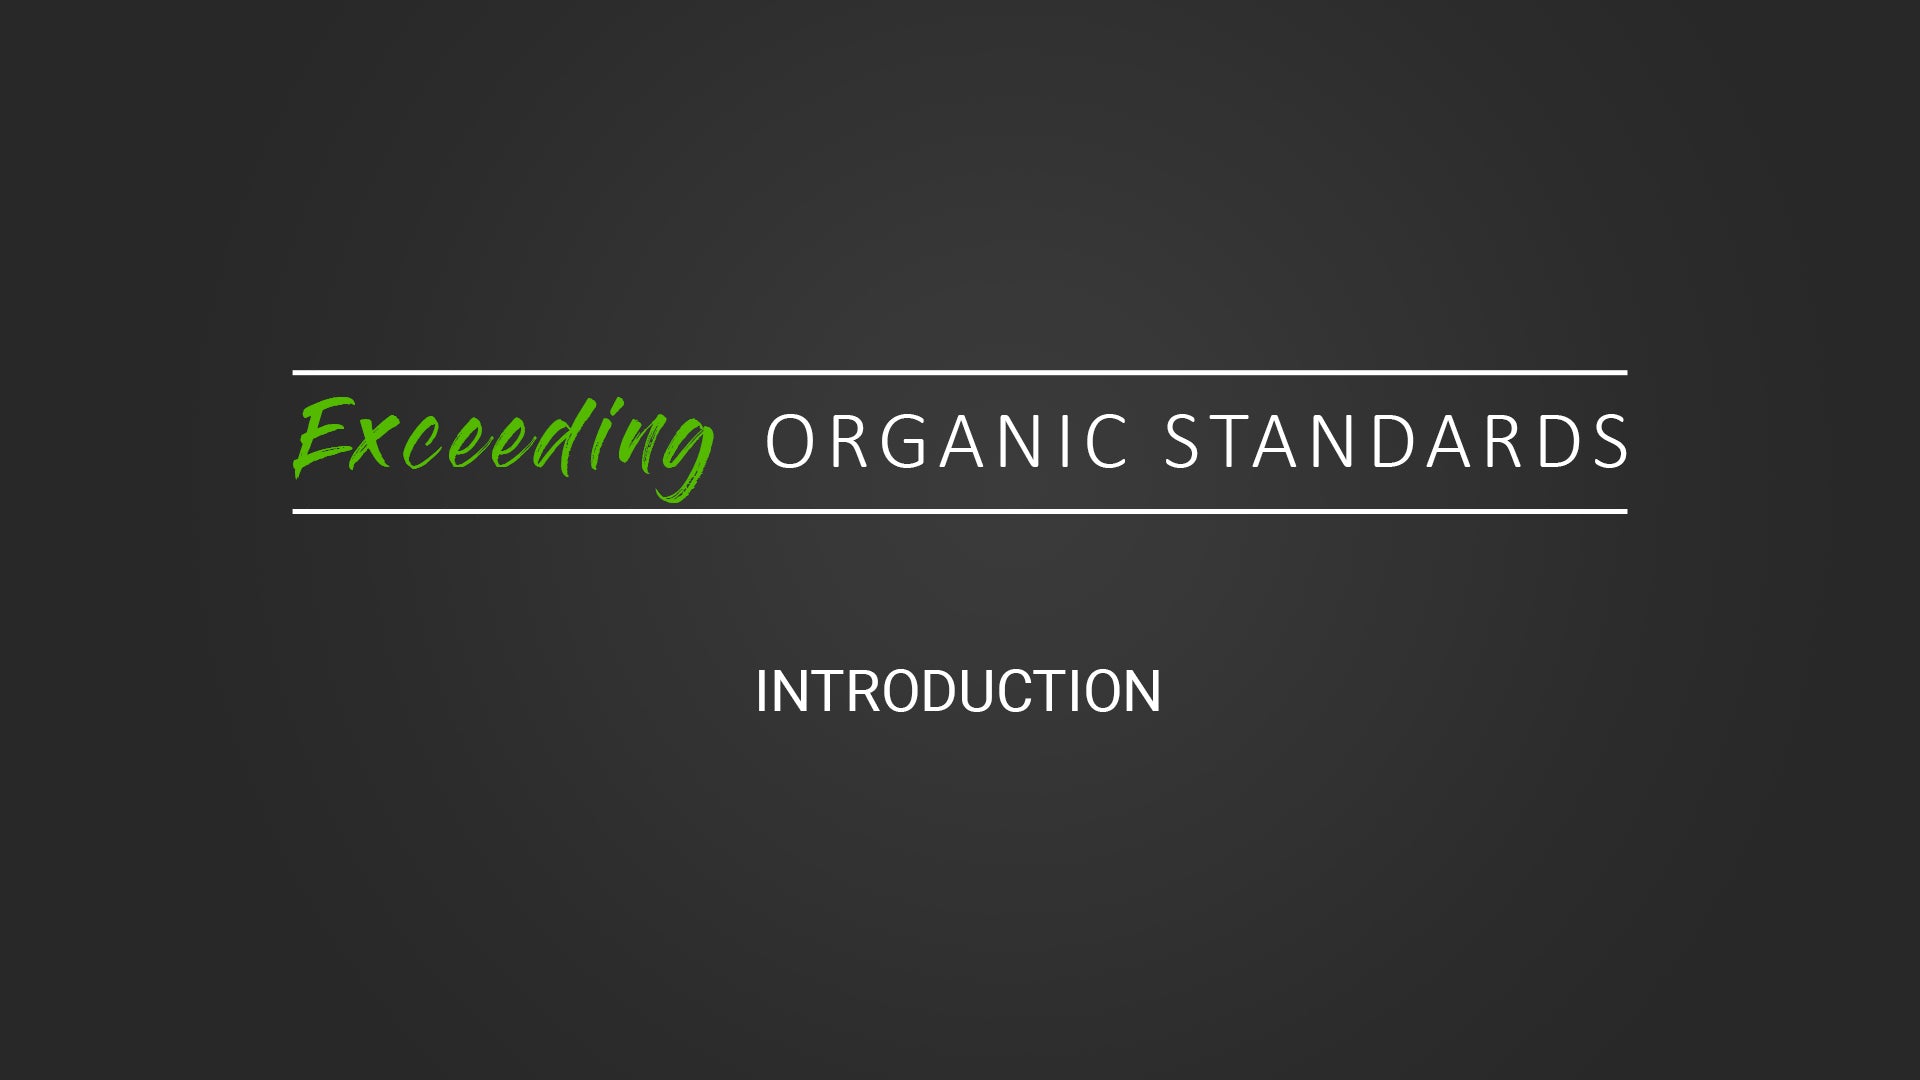 Exceeding Organic Standards: Introduction